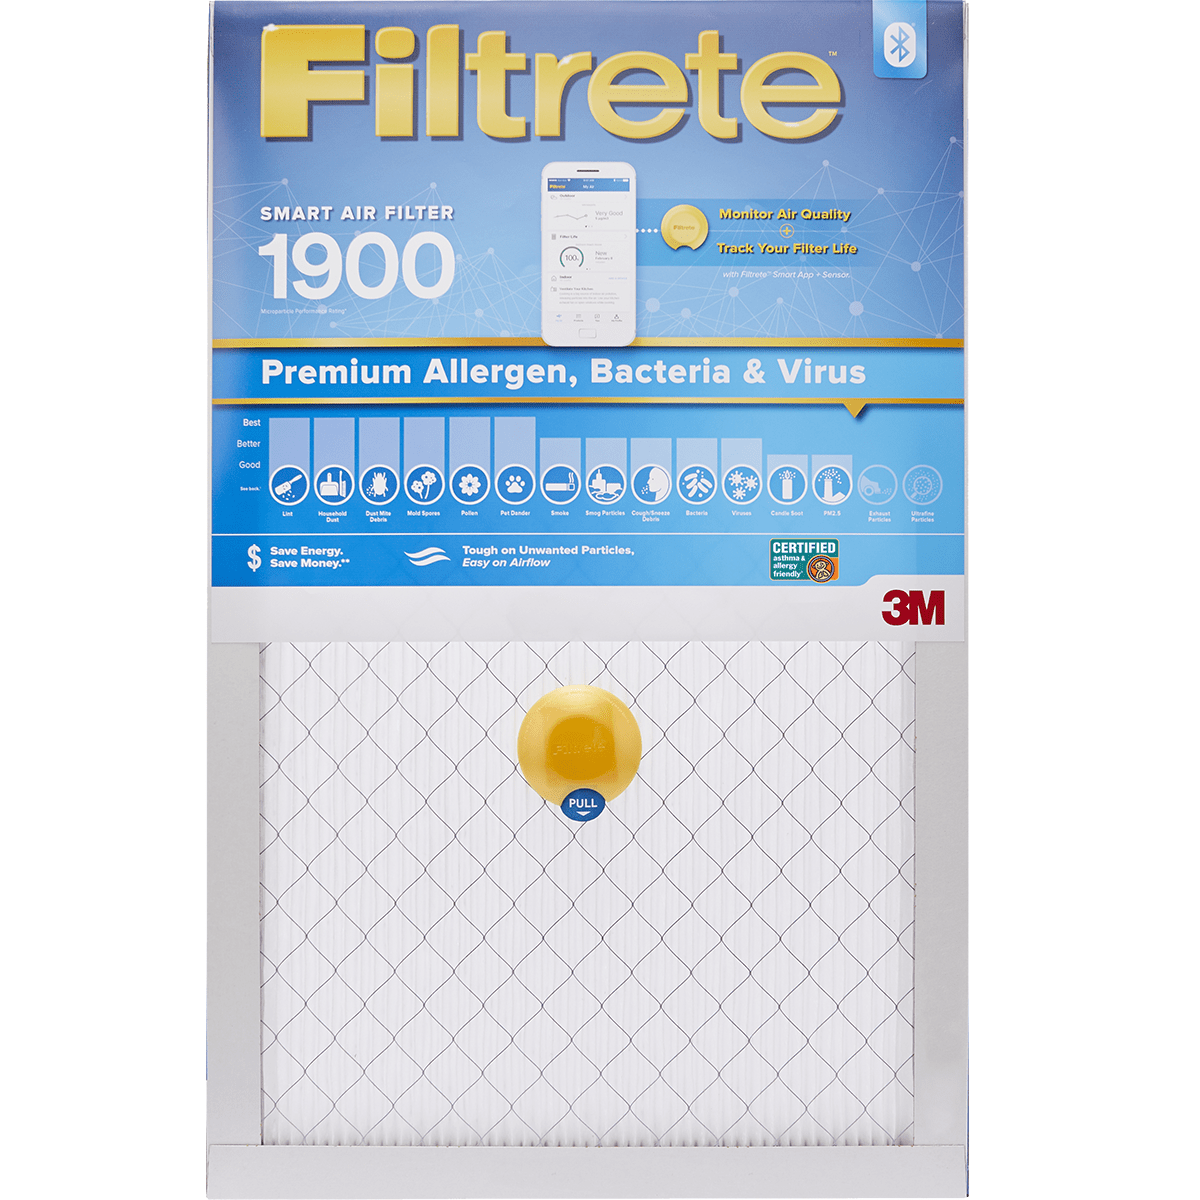 3m Filtrete 1900 Mpr Premium Allergen, Bacteria & Virus Smart Air Filter